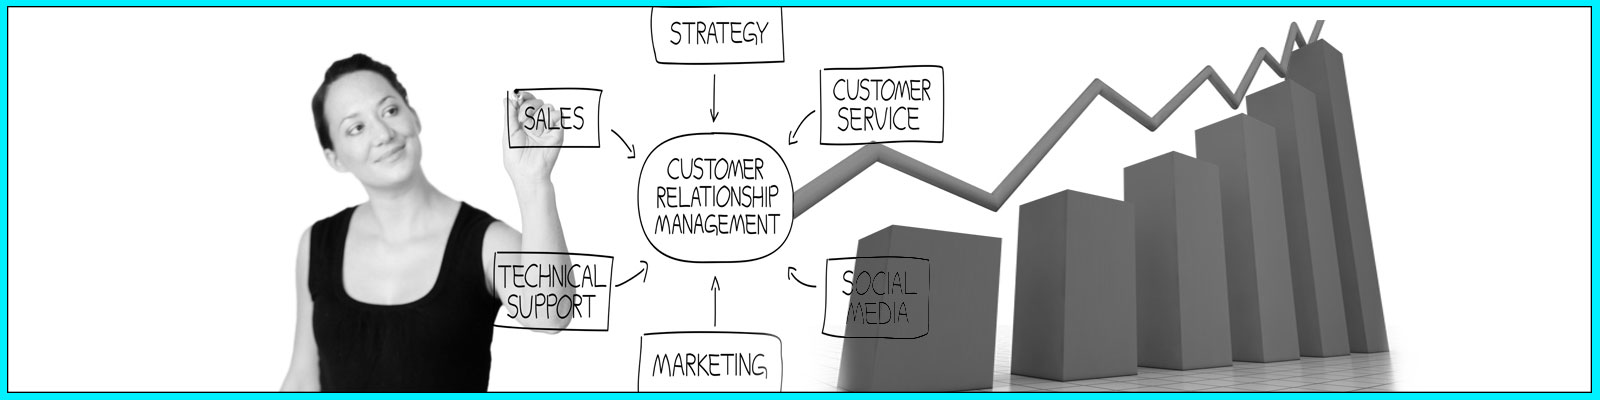 customer relationship management solution